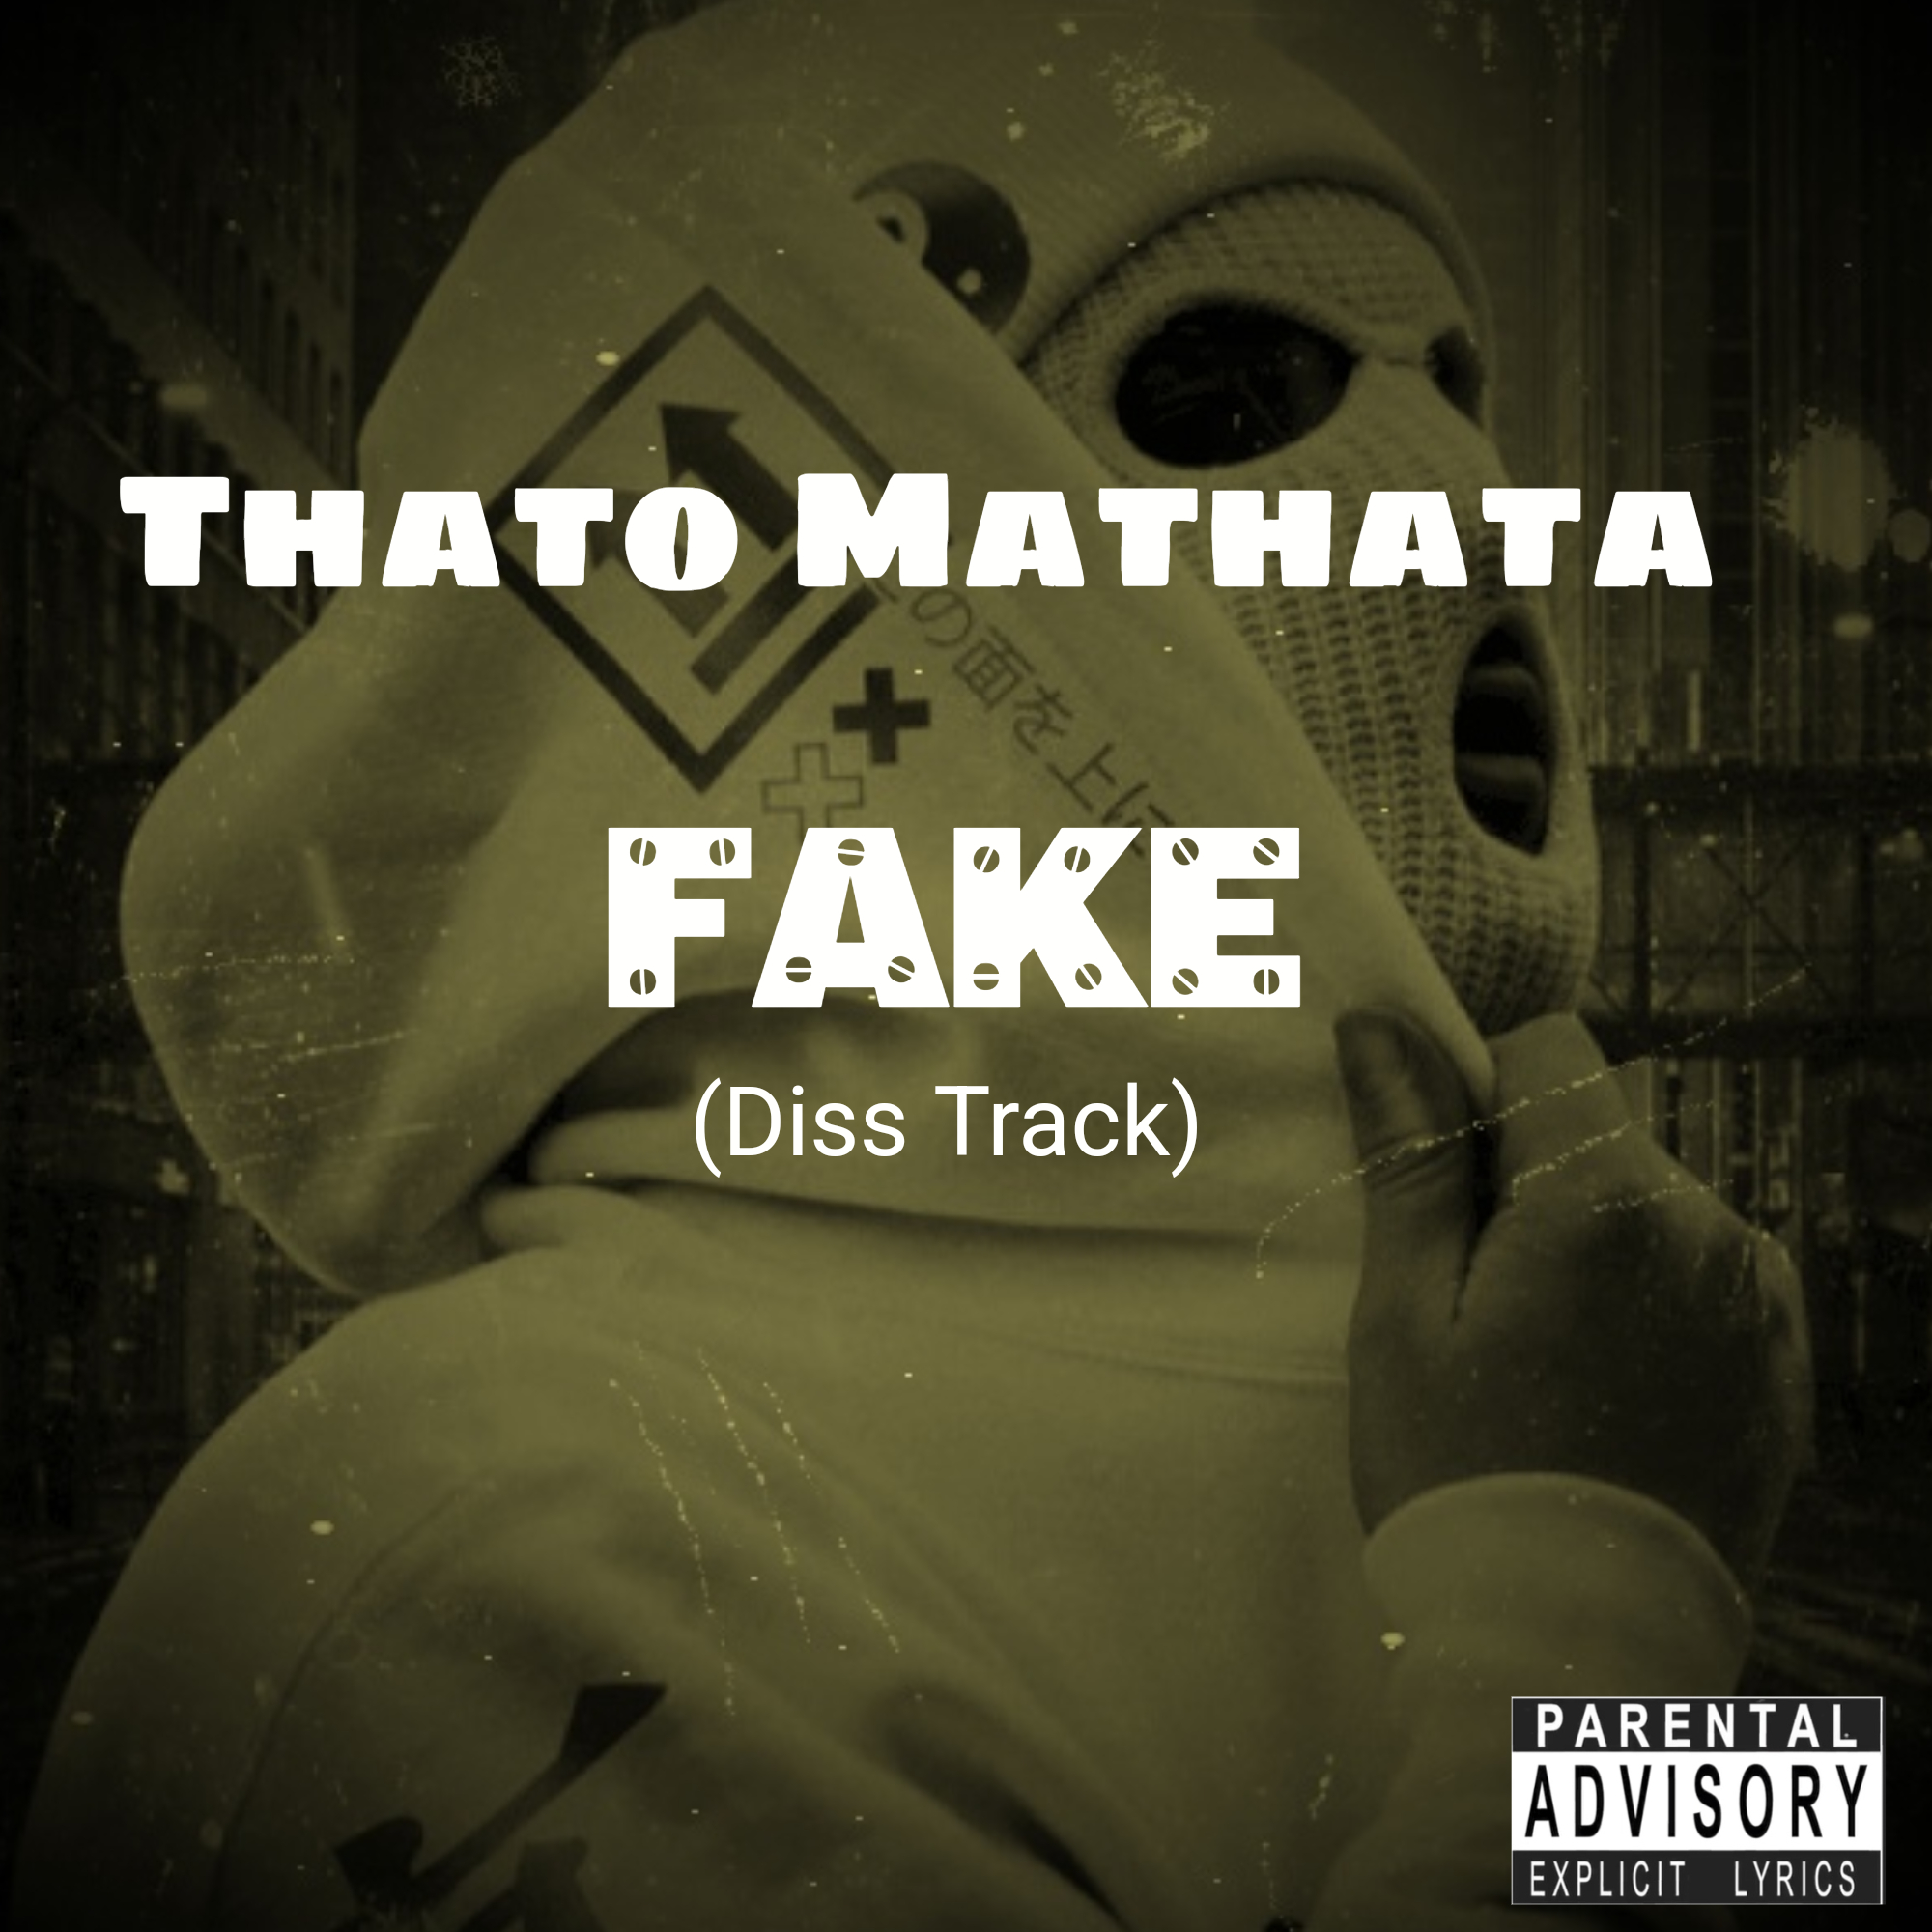 Fake ( Diss Track) - Thato Mathata